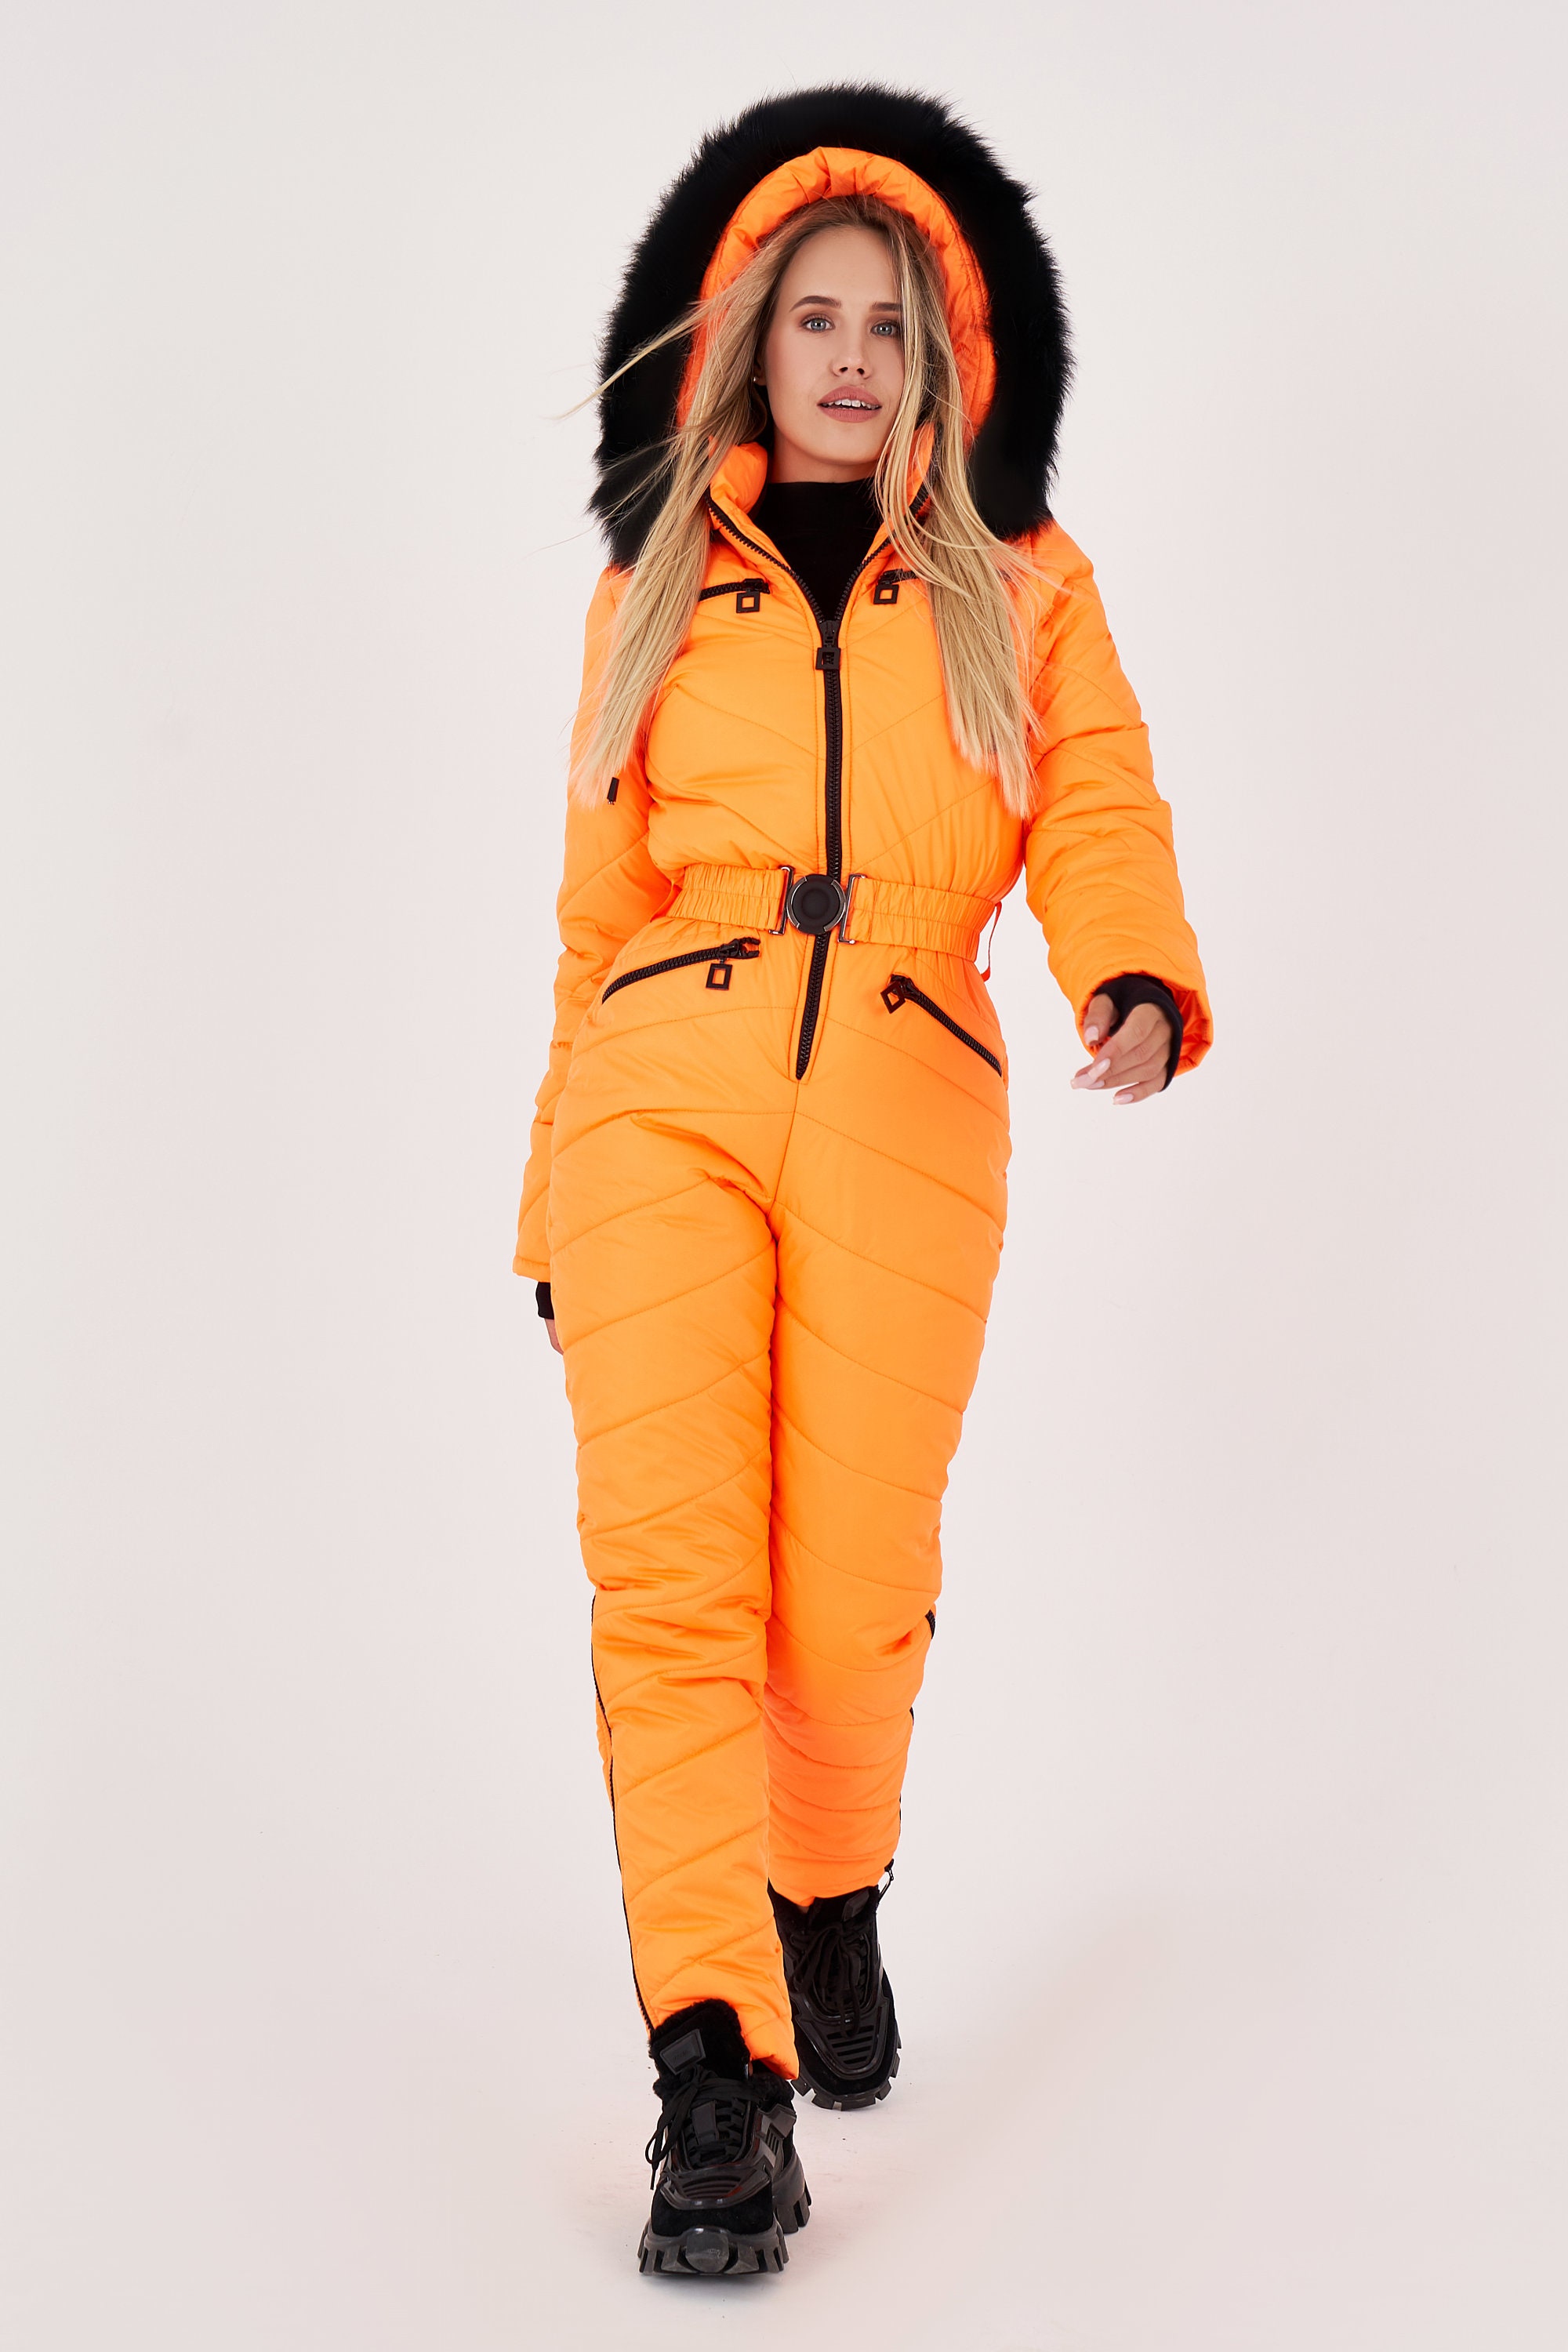 Women Ski Jumpsuit Orange With Bag and Mittens Ski Overall Ski | Etsy UK